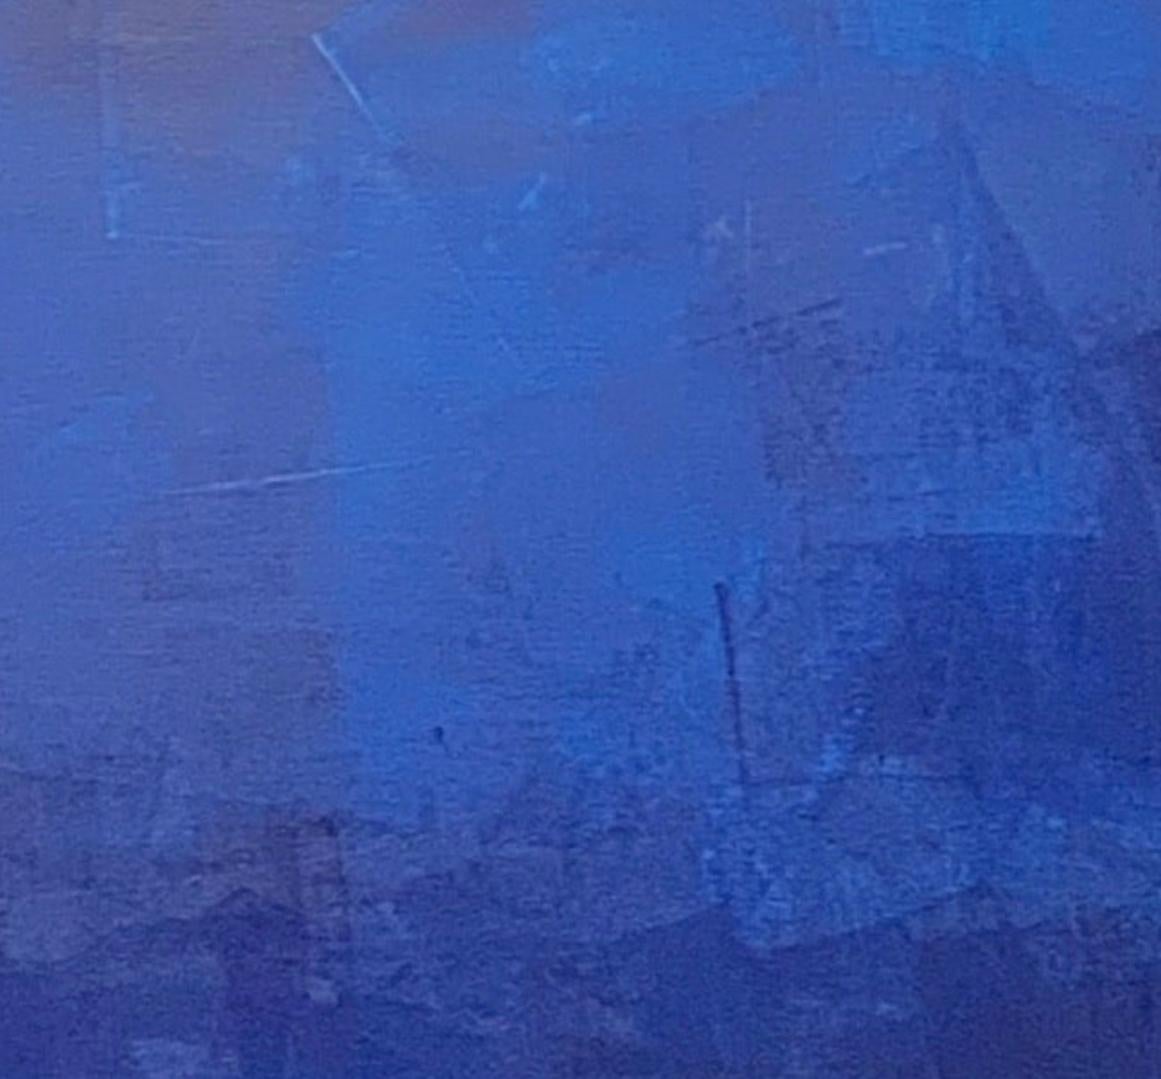 The deep sea, Contemporary ocean, dark blue, ocean essence, Florida art - Abstract Impressionist Painting by Juanita Bellavance 